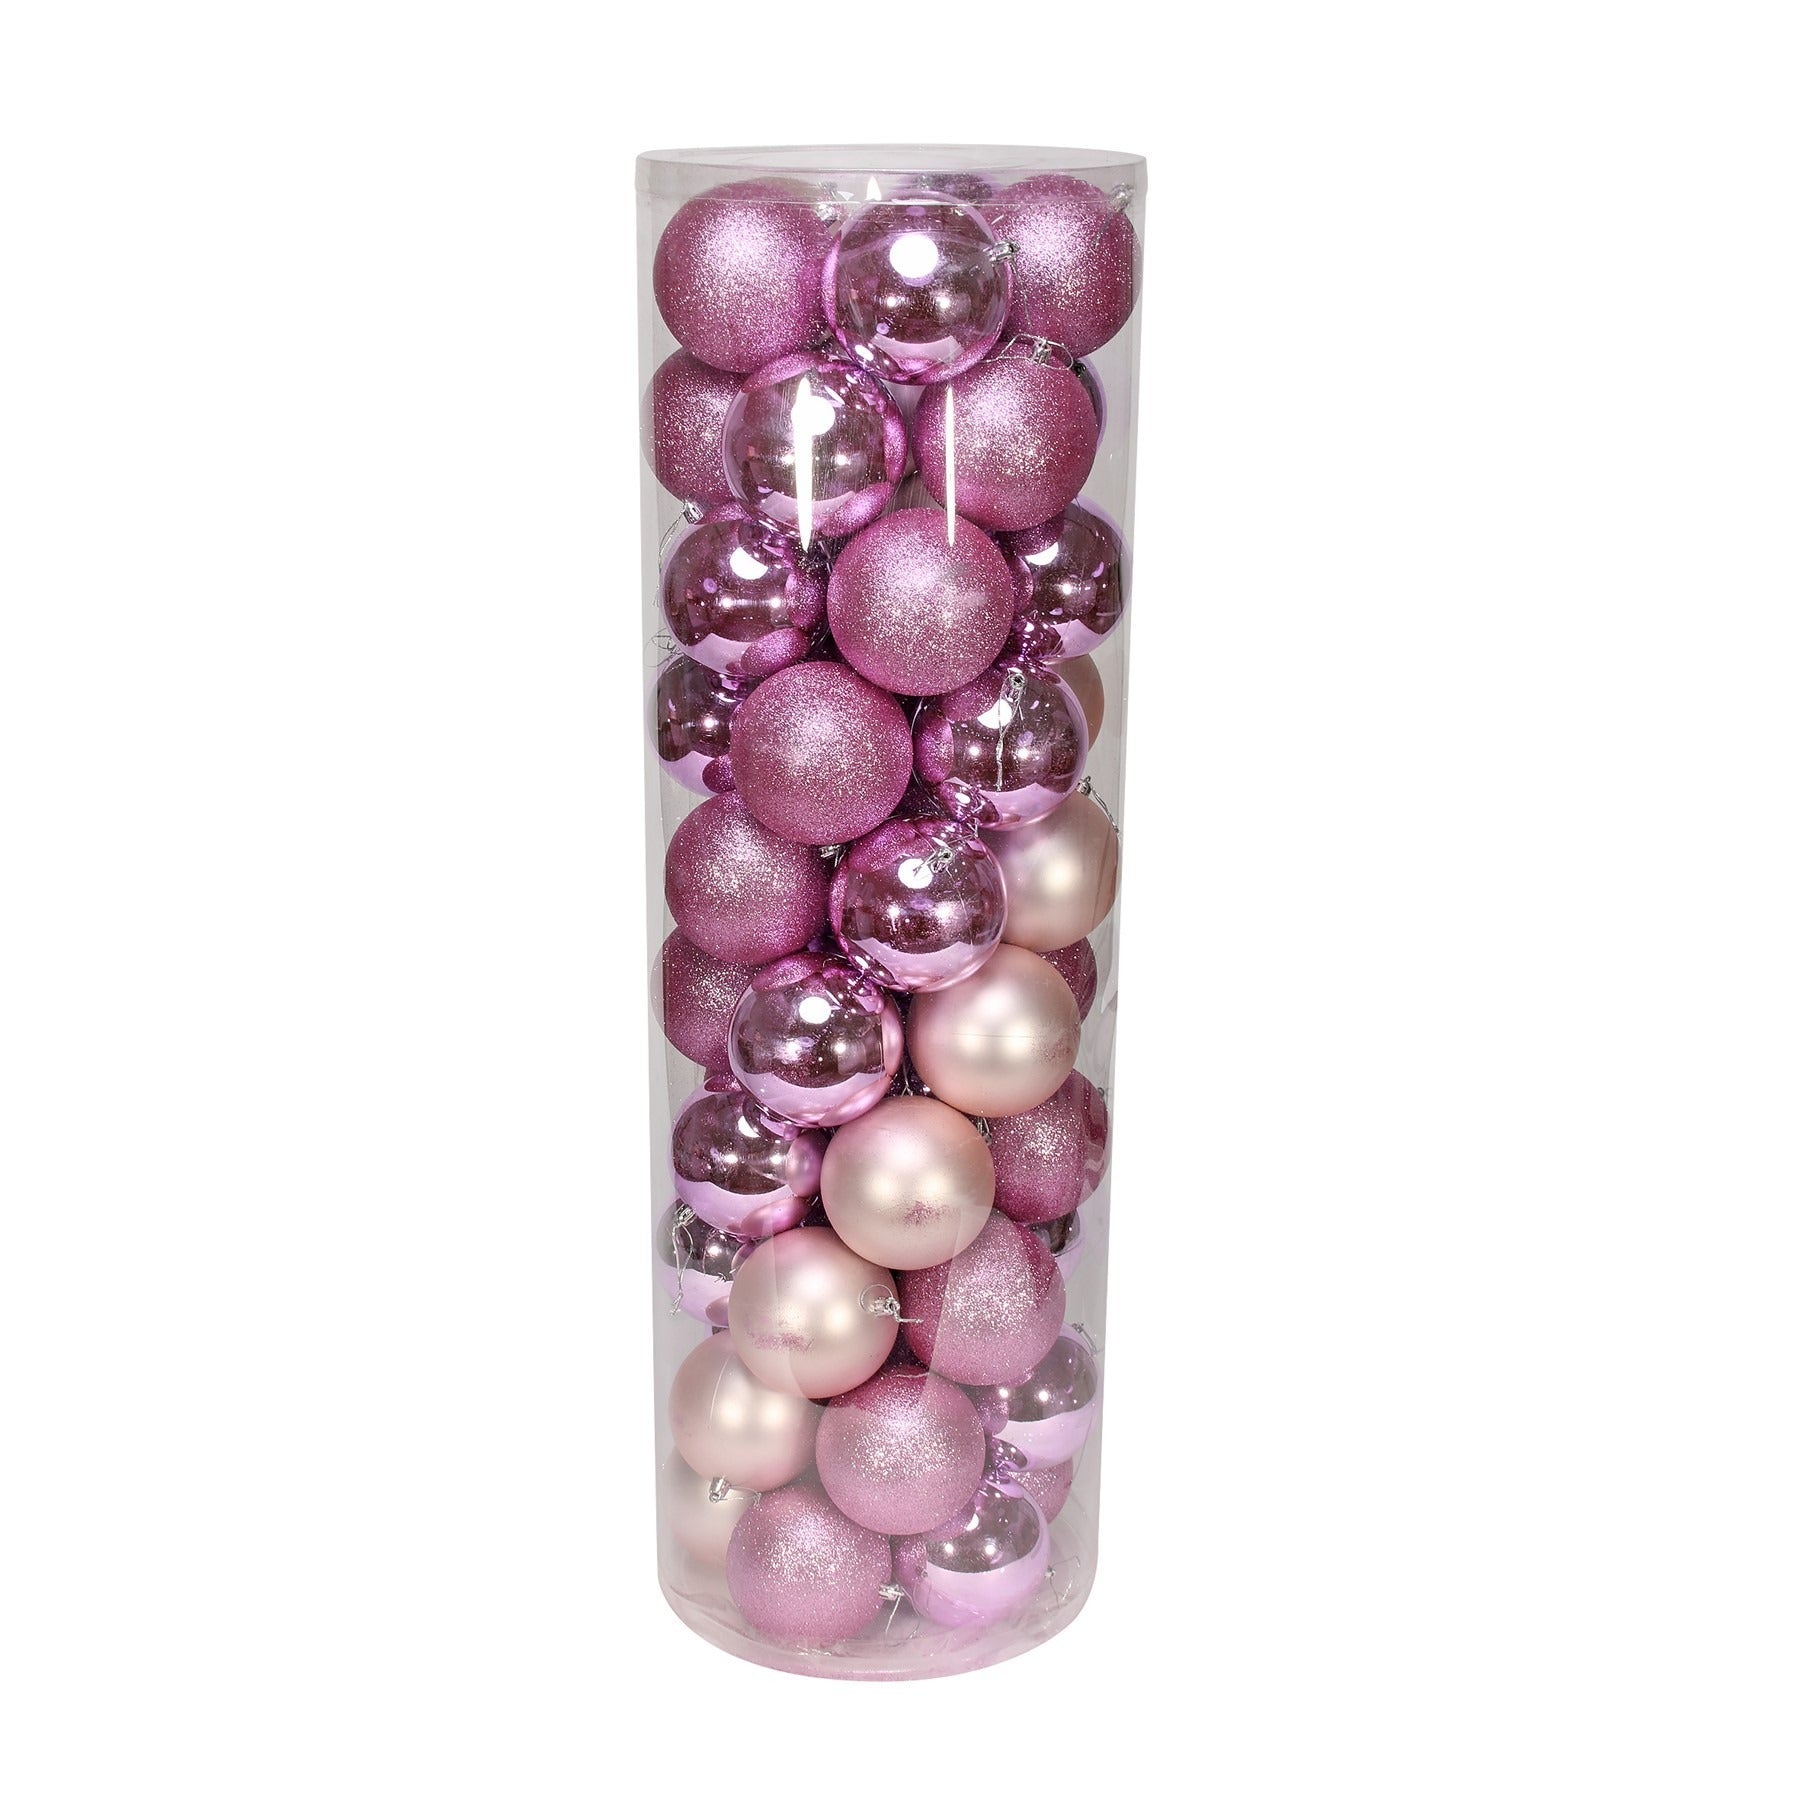 View 50 Pink Baubles in Matt Shiny Glitter Finish 10cm information